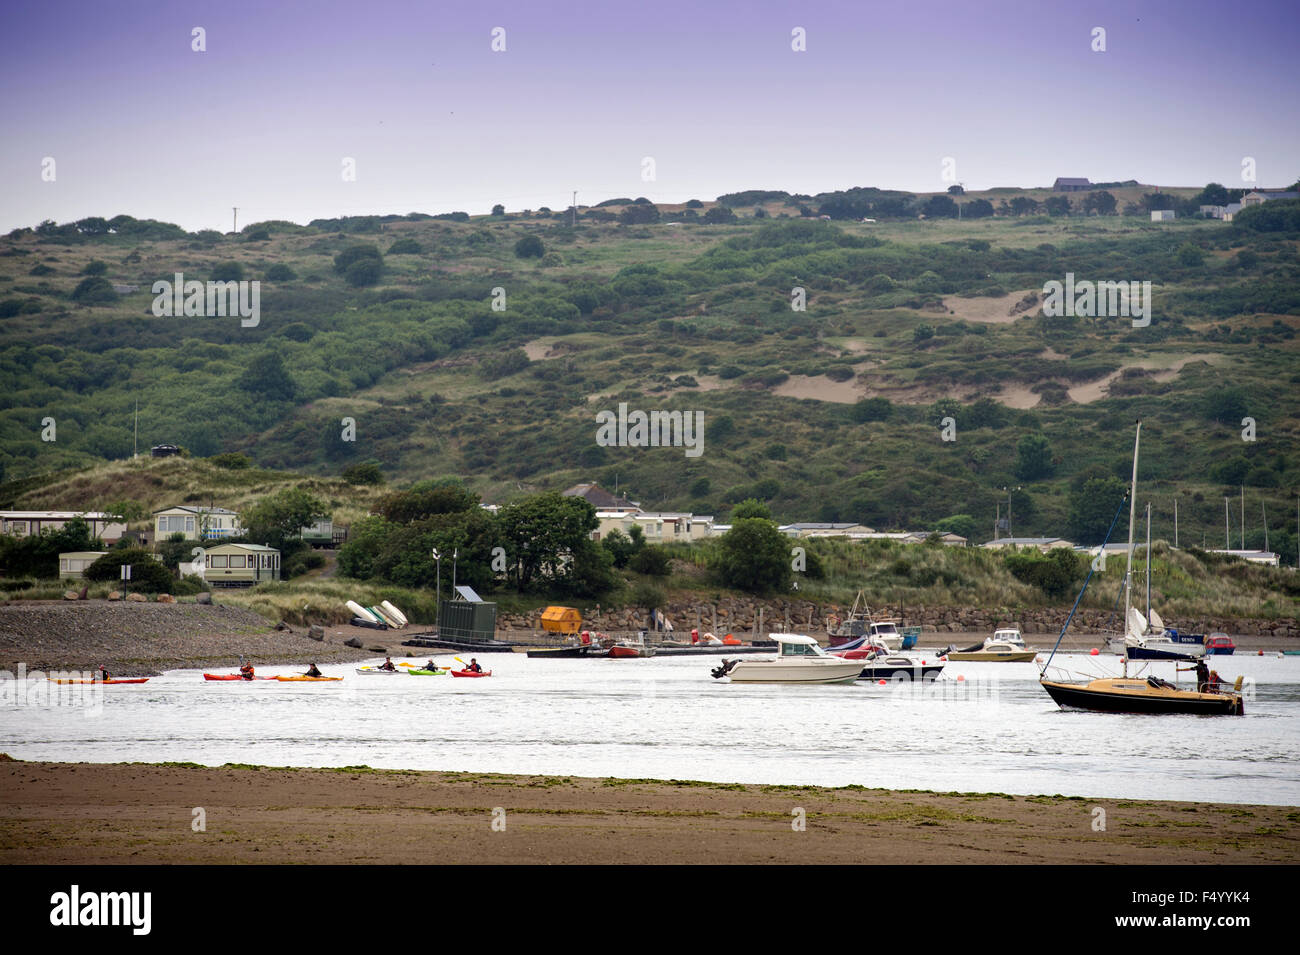 Barche a vela ormeggiata sul fiume Teifi estuary vicino a St Dogmaels, Pembrokeshire, Wales UK Foto Stock